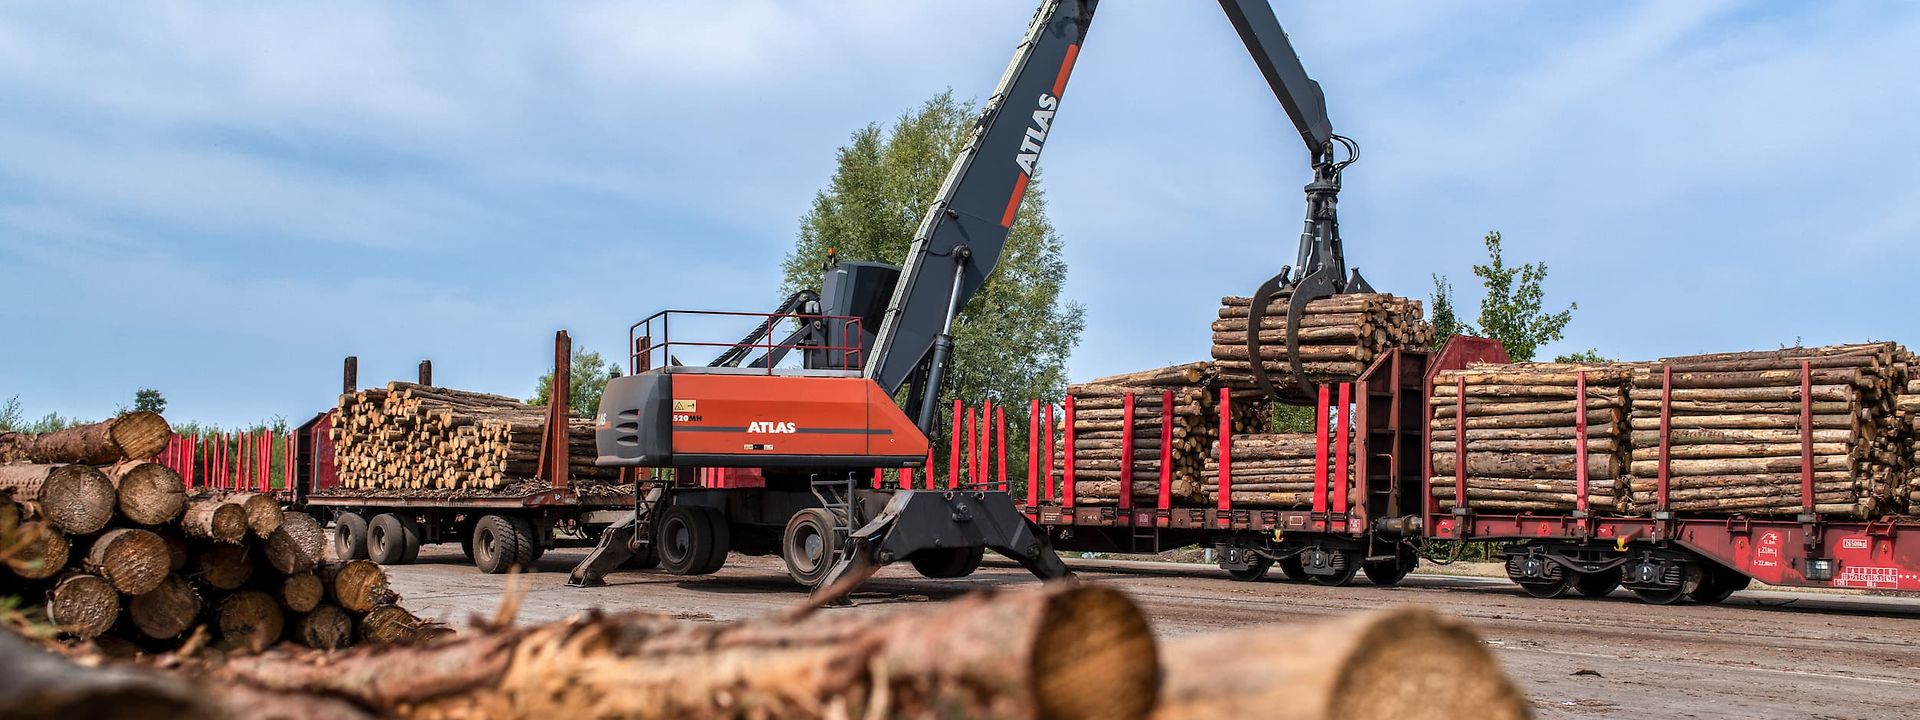 Excavator loading logs onto a stationary train